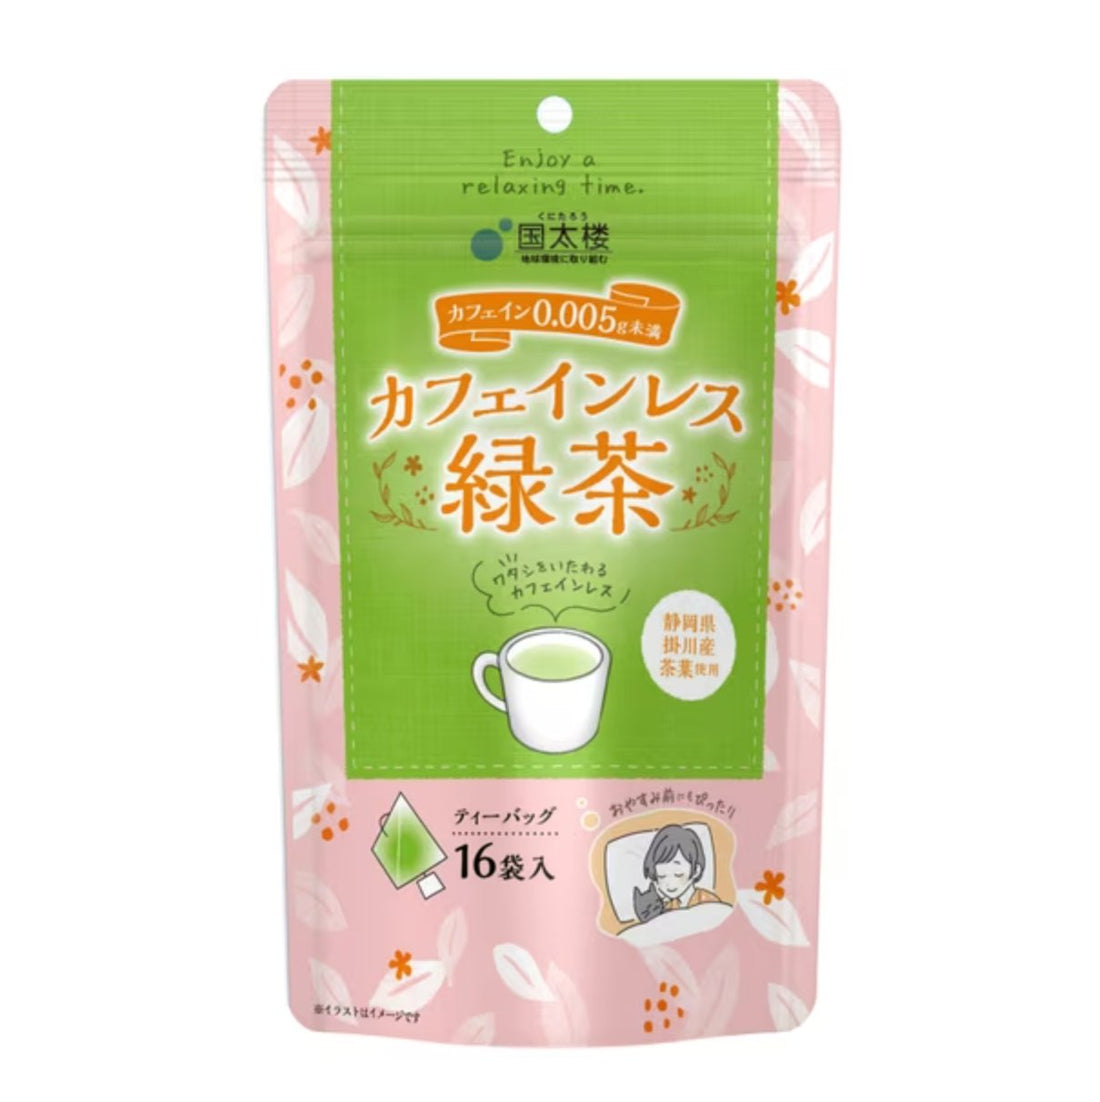 Kunitaro Decaffeinated Green Tea Triangular TB 28.8g (1.8g x 16 bags) - NihonMura